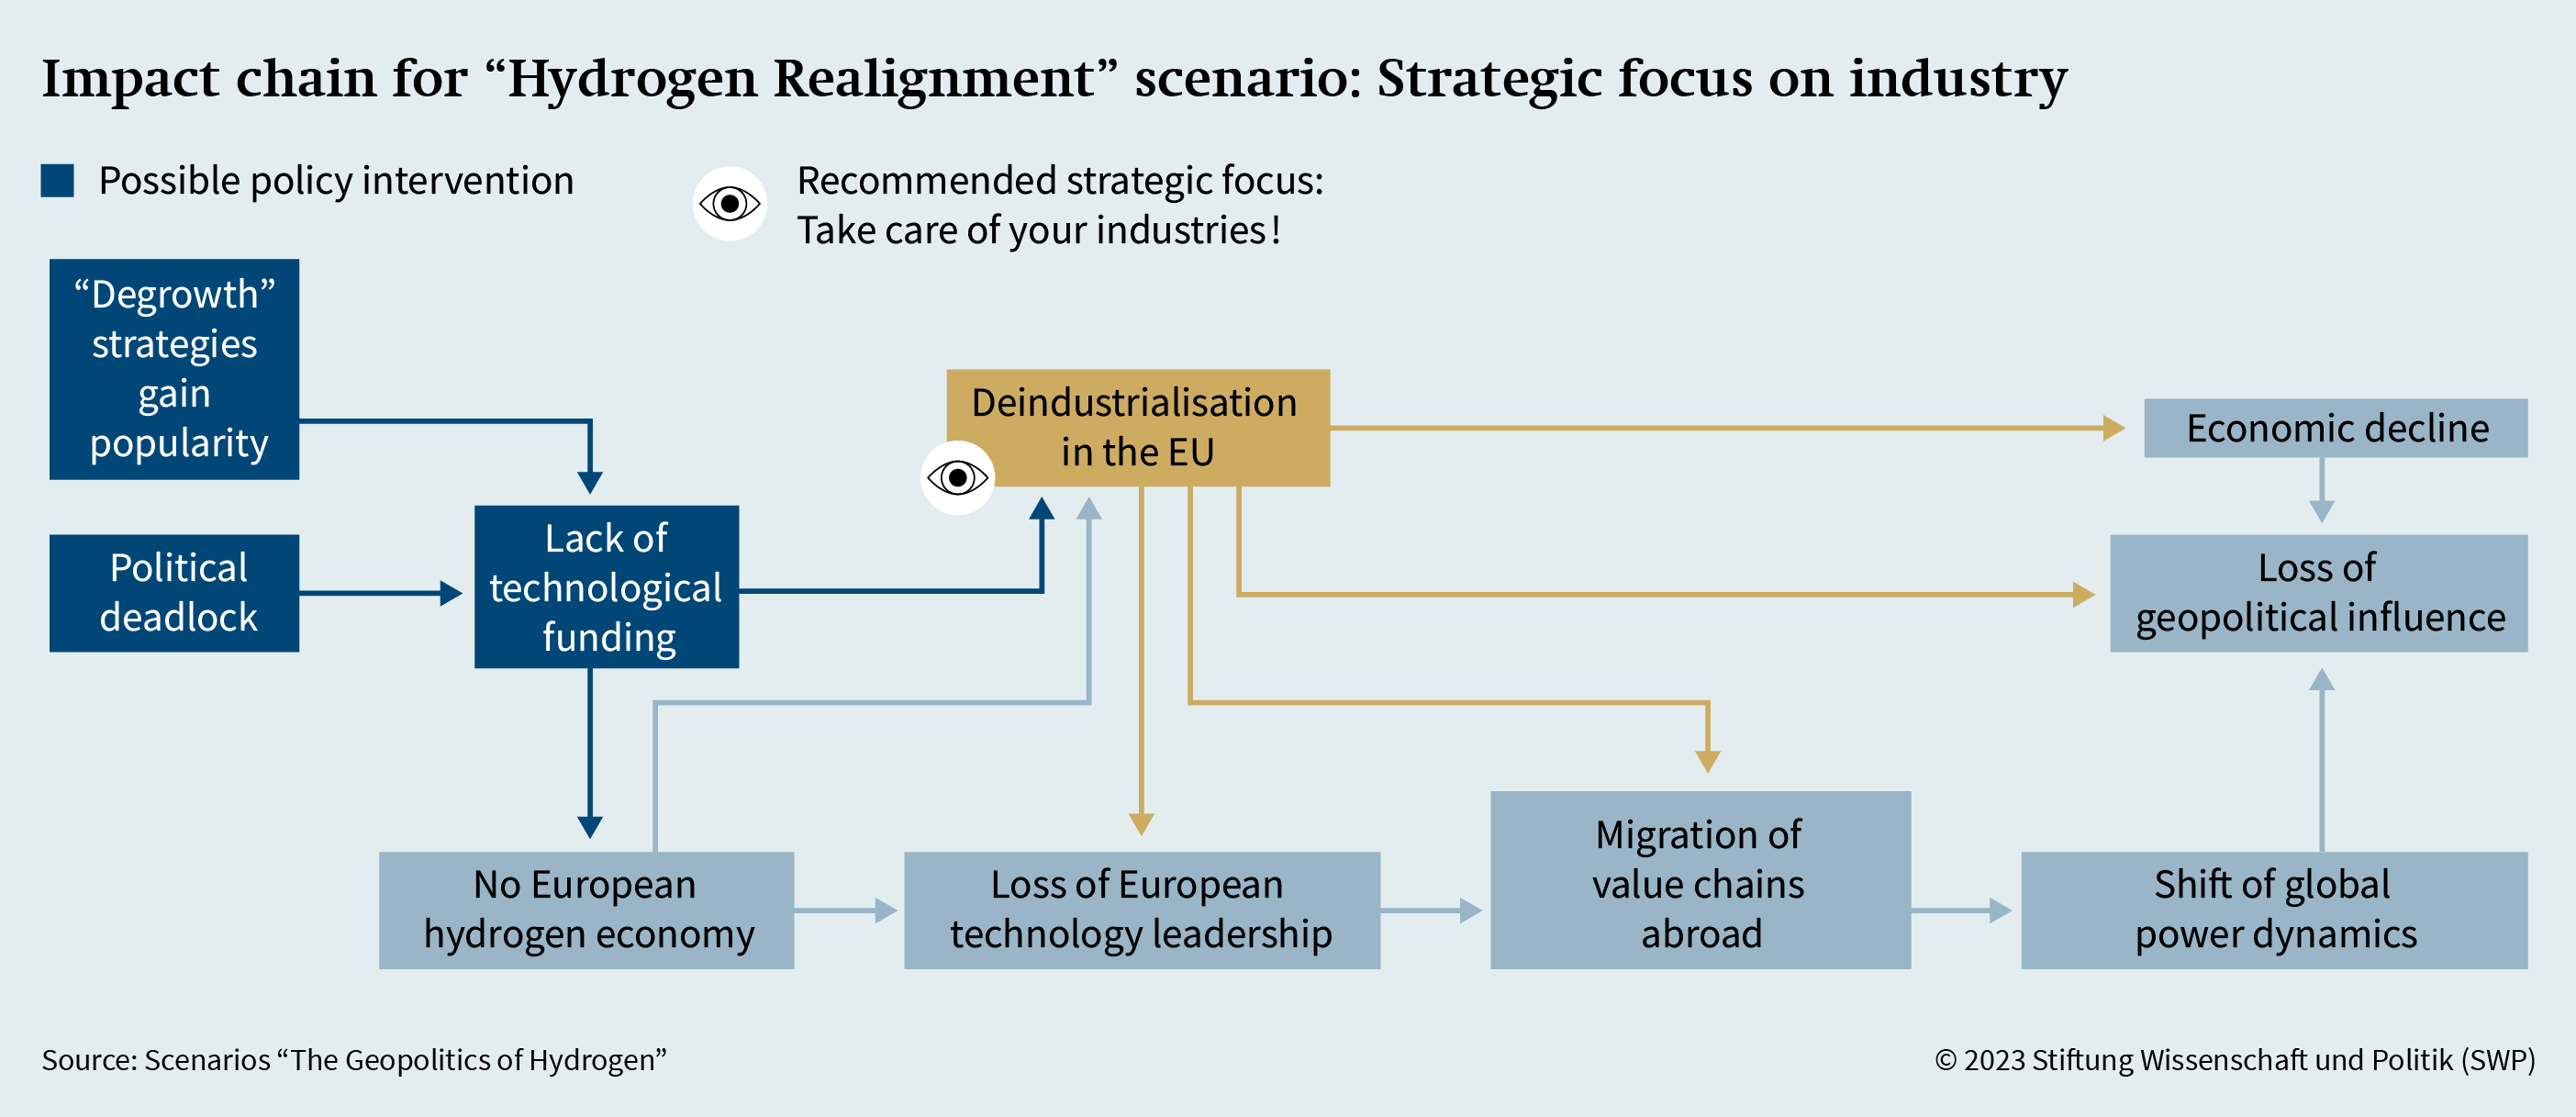 Figure 5: Impact chain for "Hydrogen Realignment" scenario: strategic focus on industry